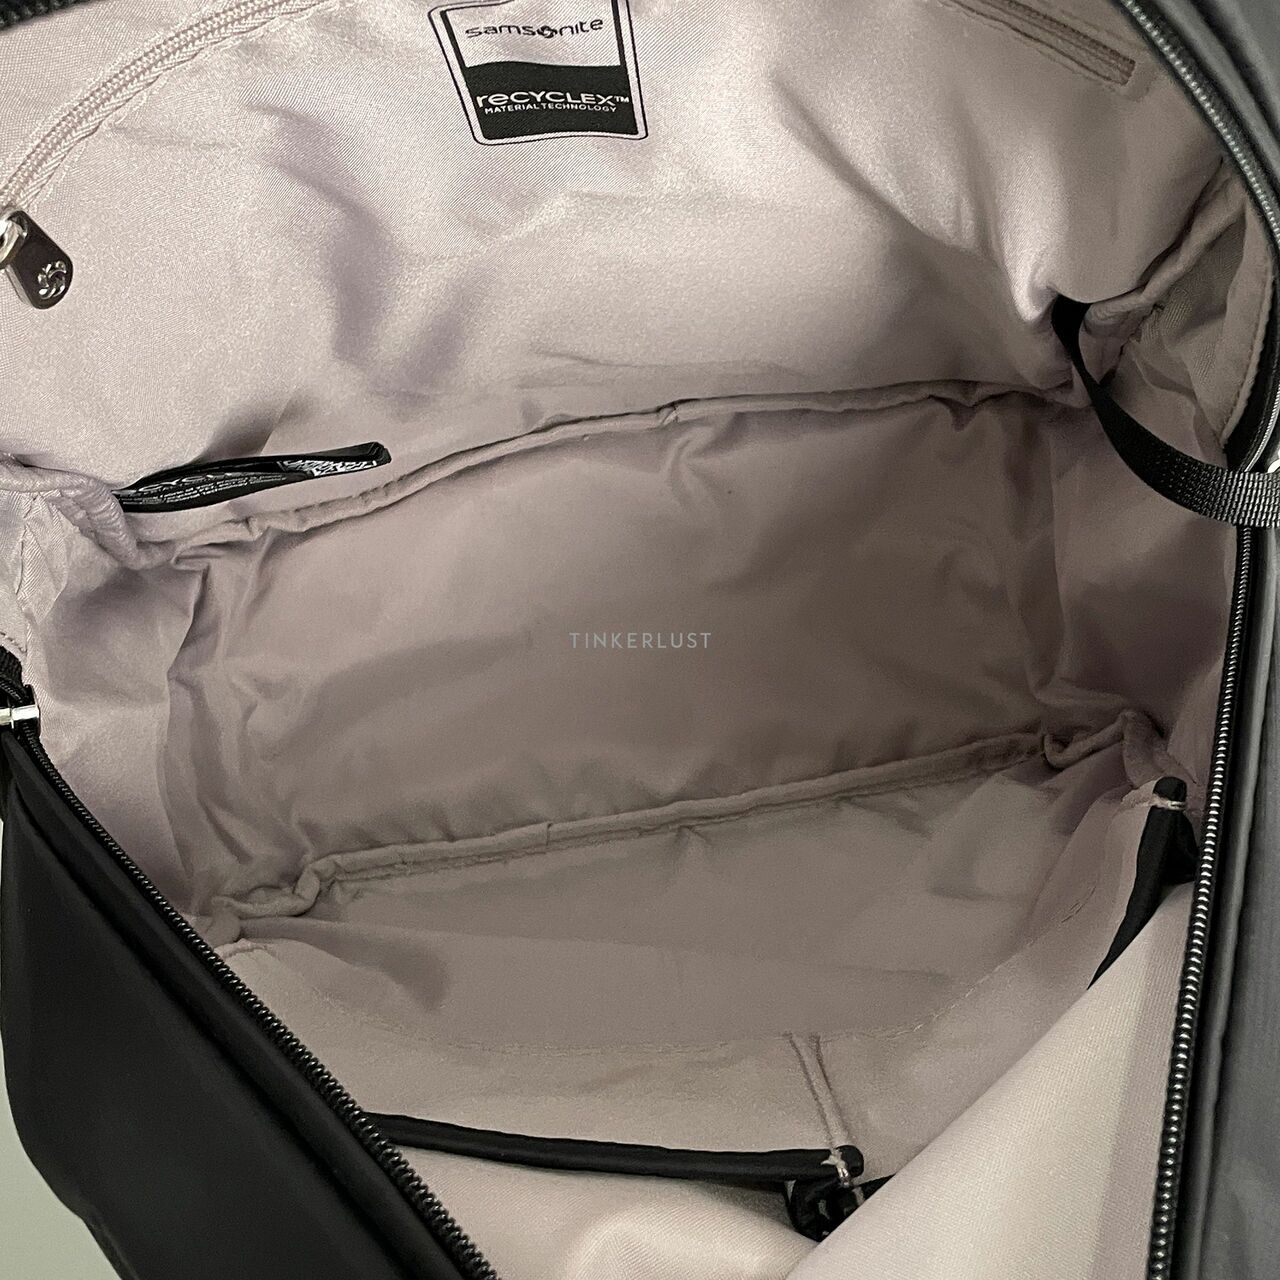 Samsonite Black Backpack